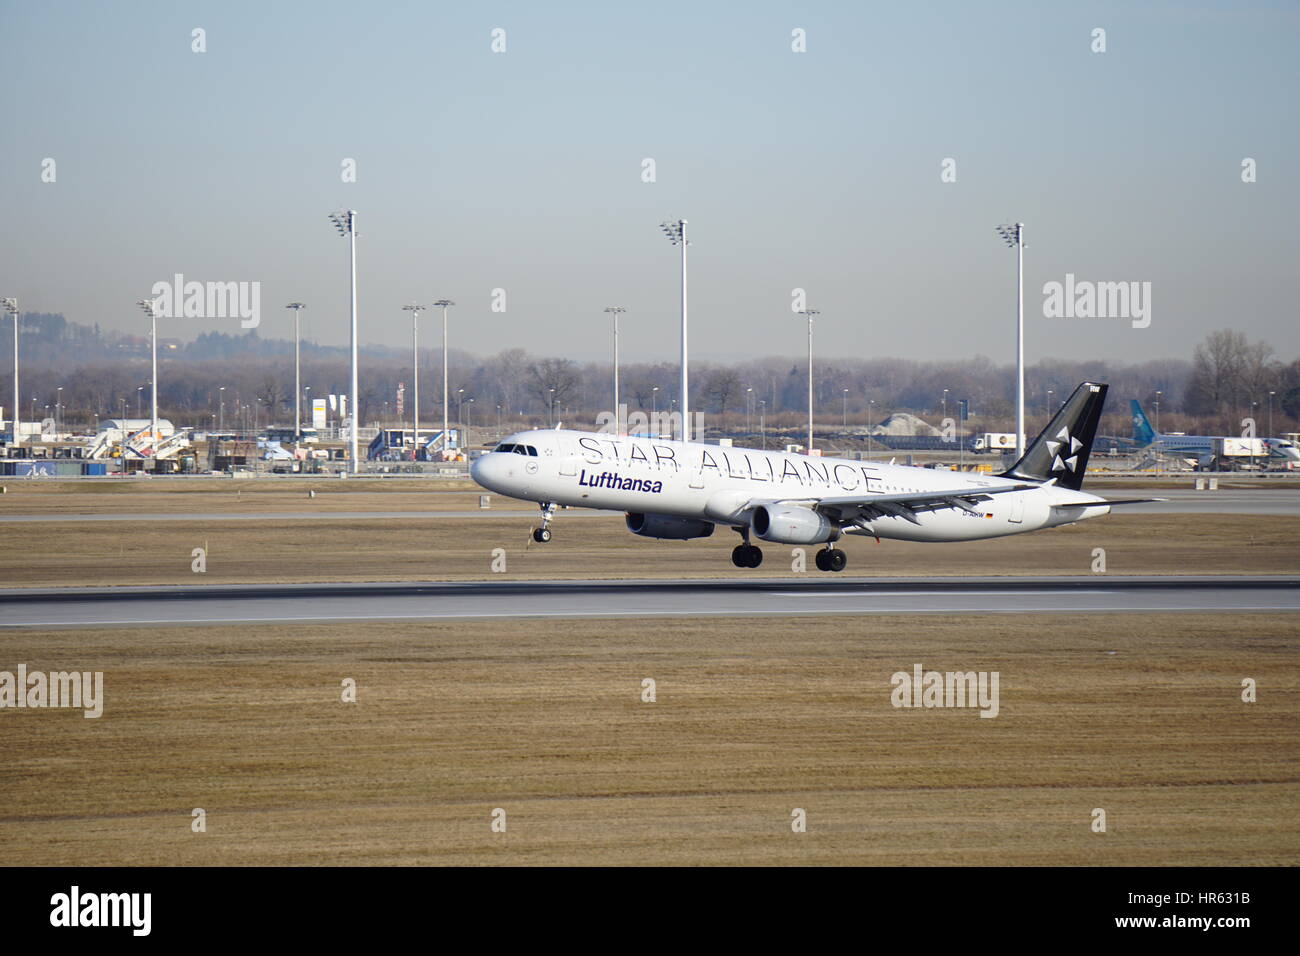 Lufthansa Star Alliance, A321-100, aterrizando en el aeropuerto internacional Franz Joseph Strauß, Munich, 26L, a las 09.55 hora local. Foto de stock